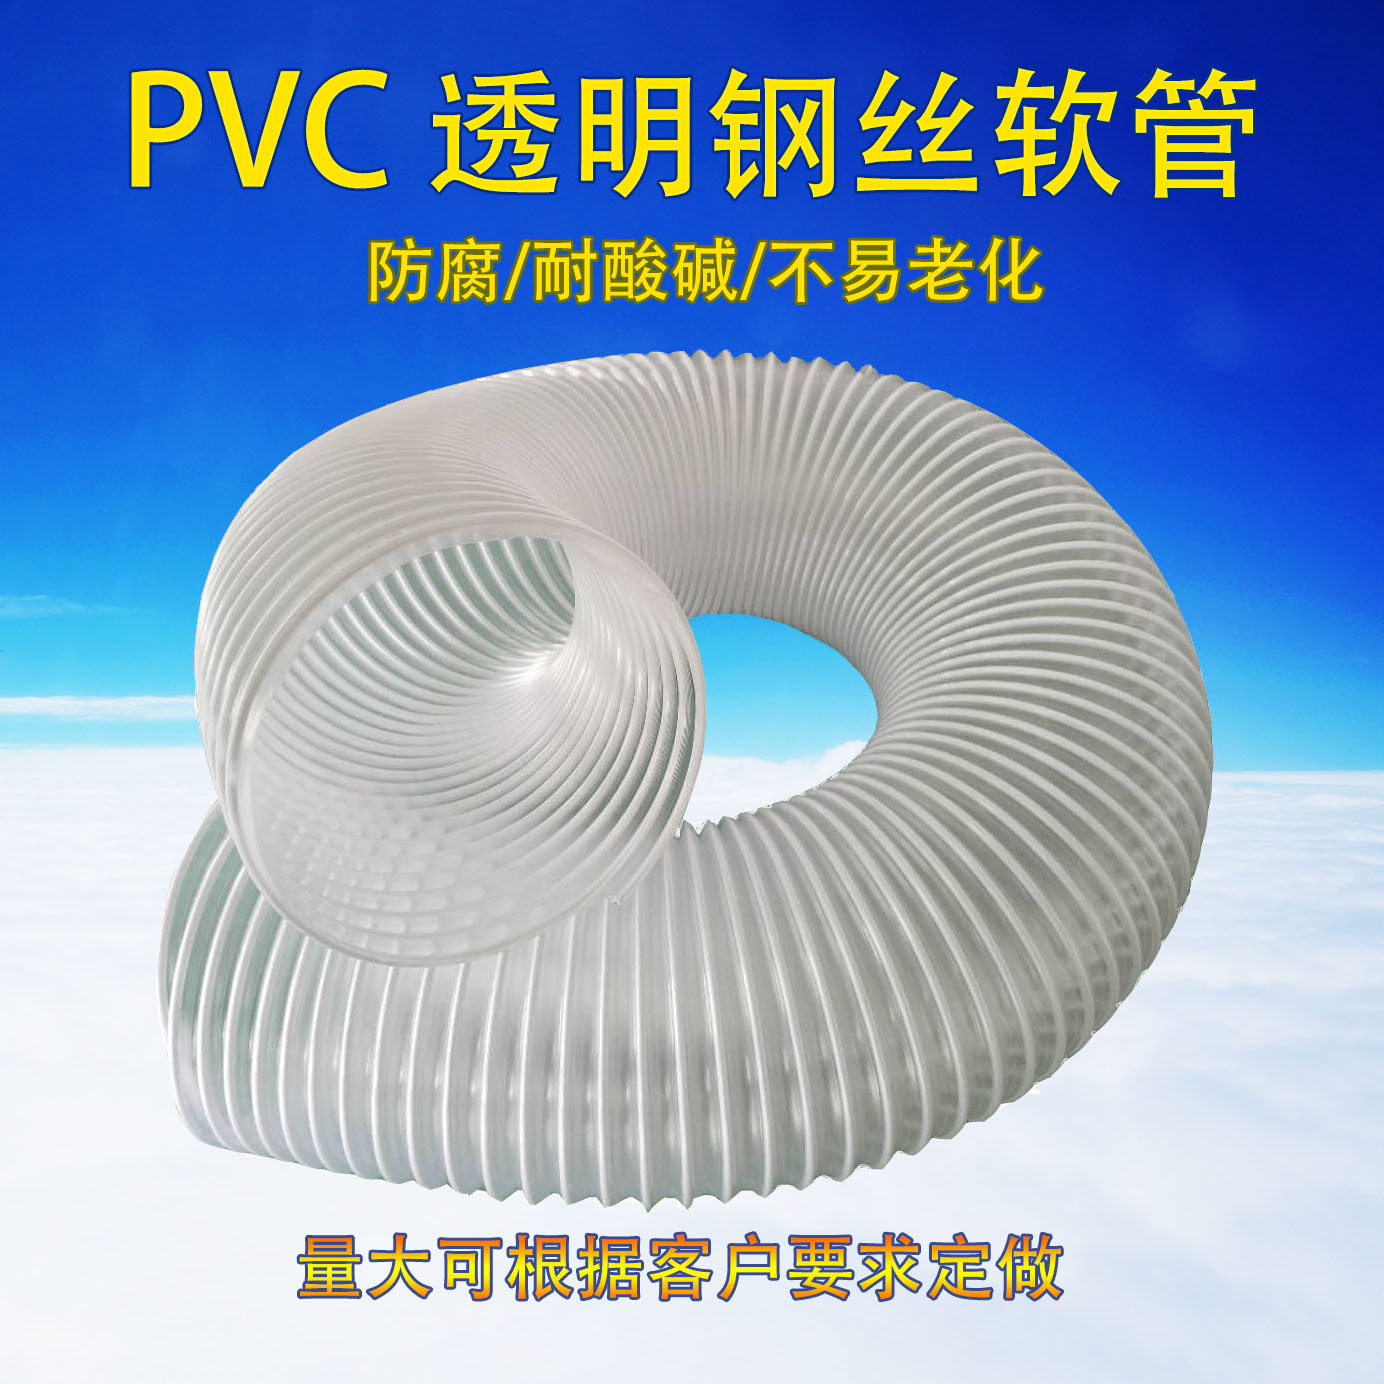 PVC透明钢丝软管排风管木工机械吸尘抽油烟塑料伸缩管30mm-300mm